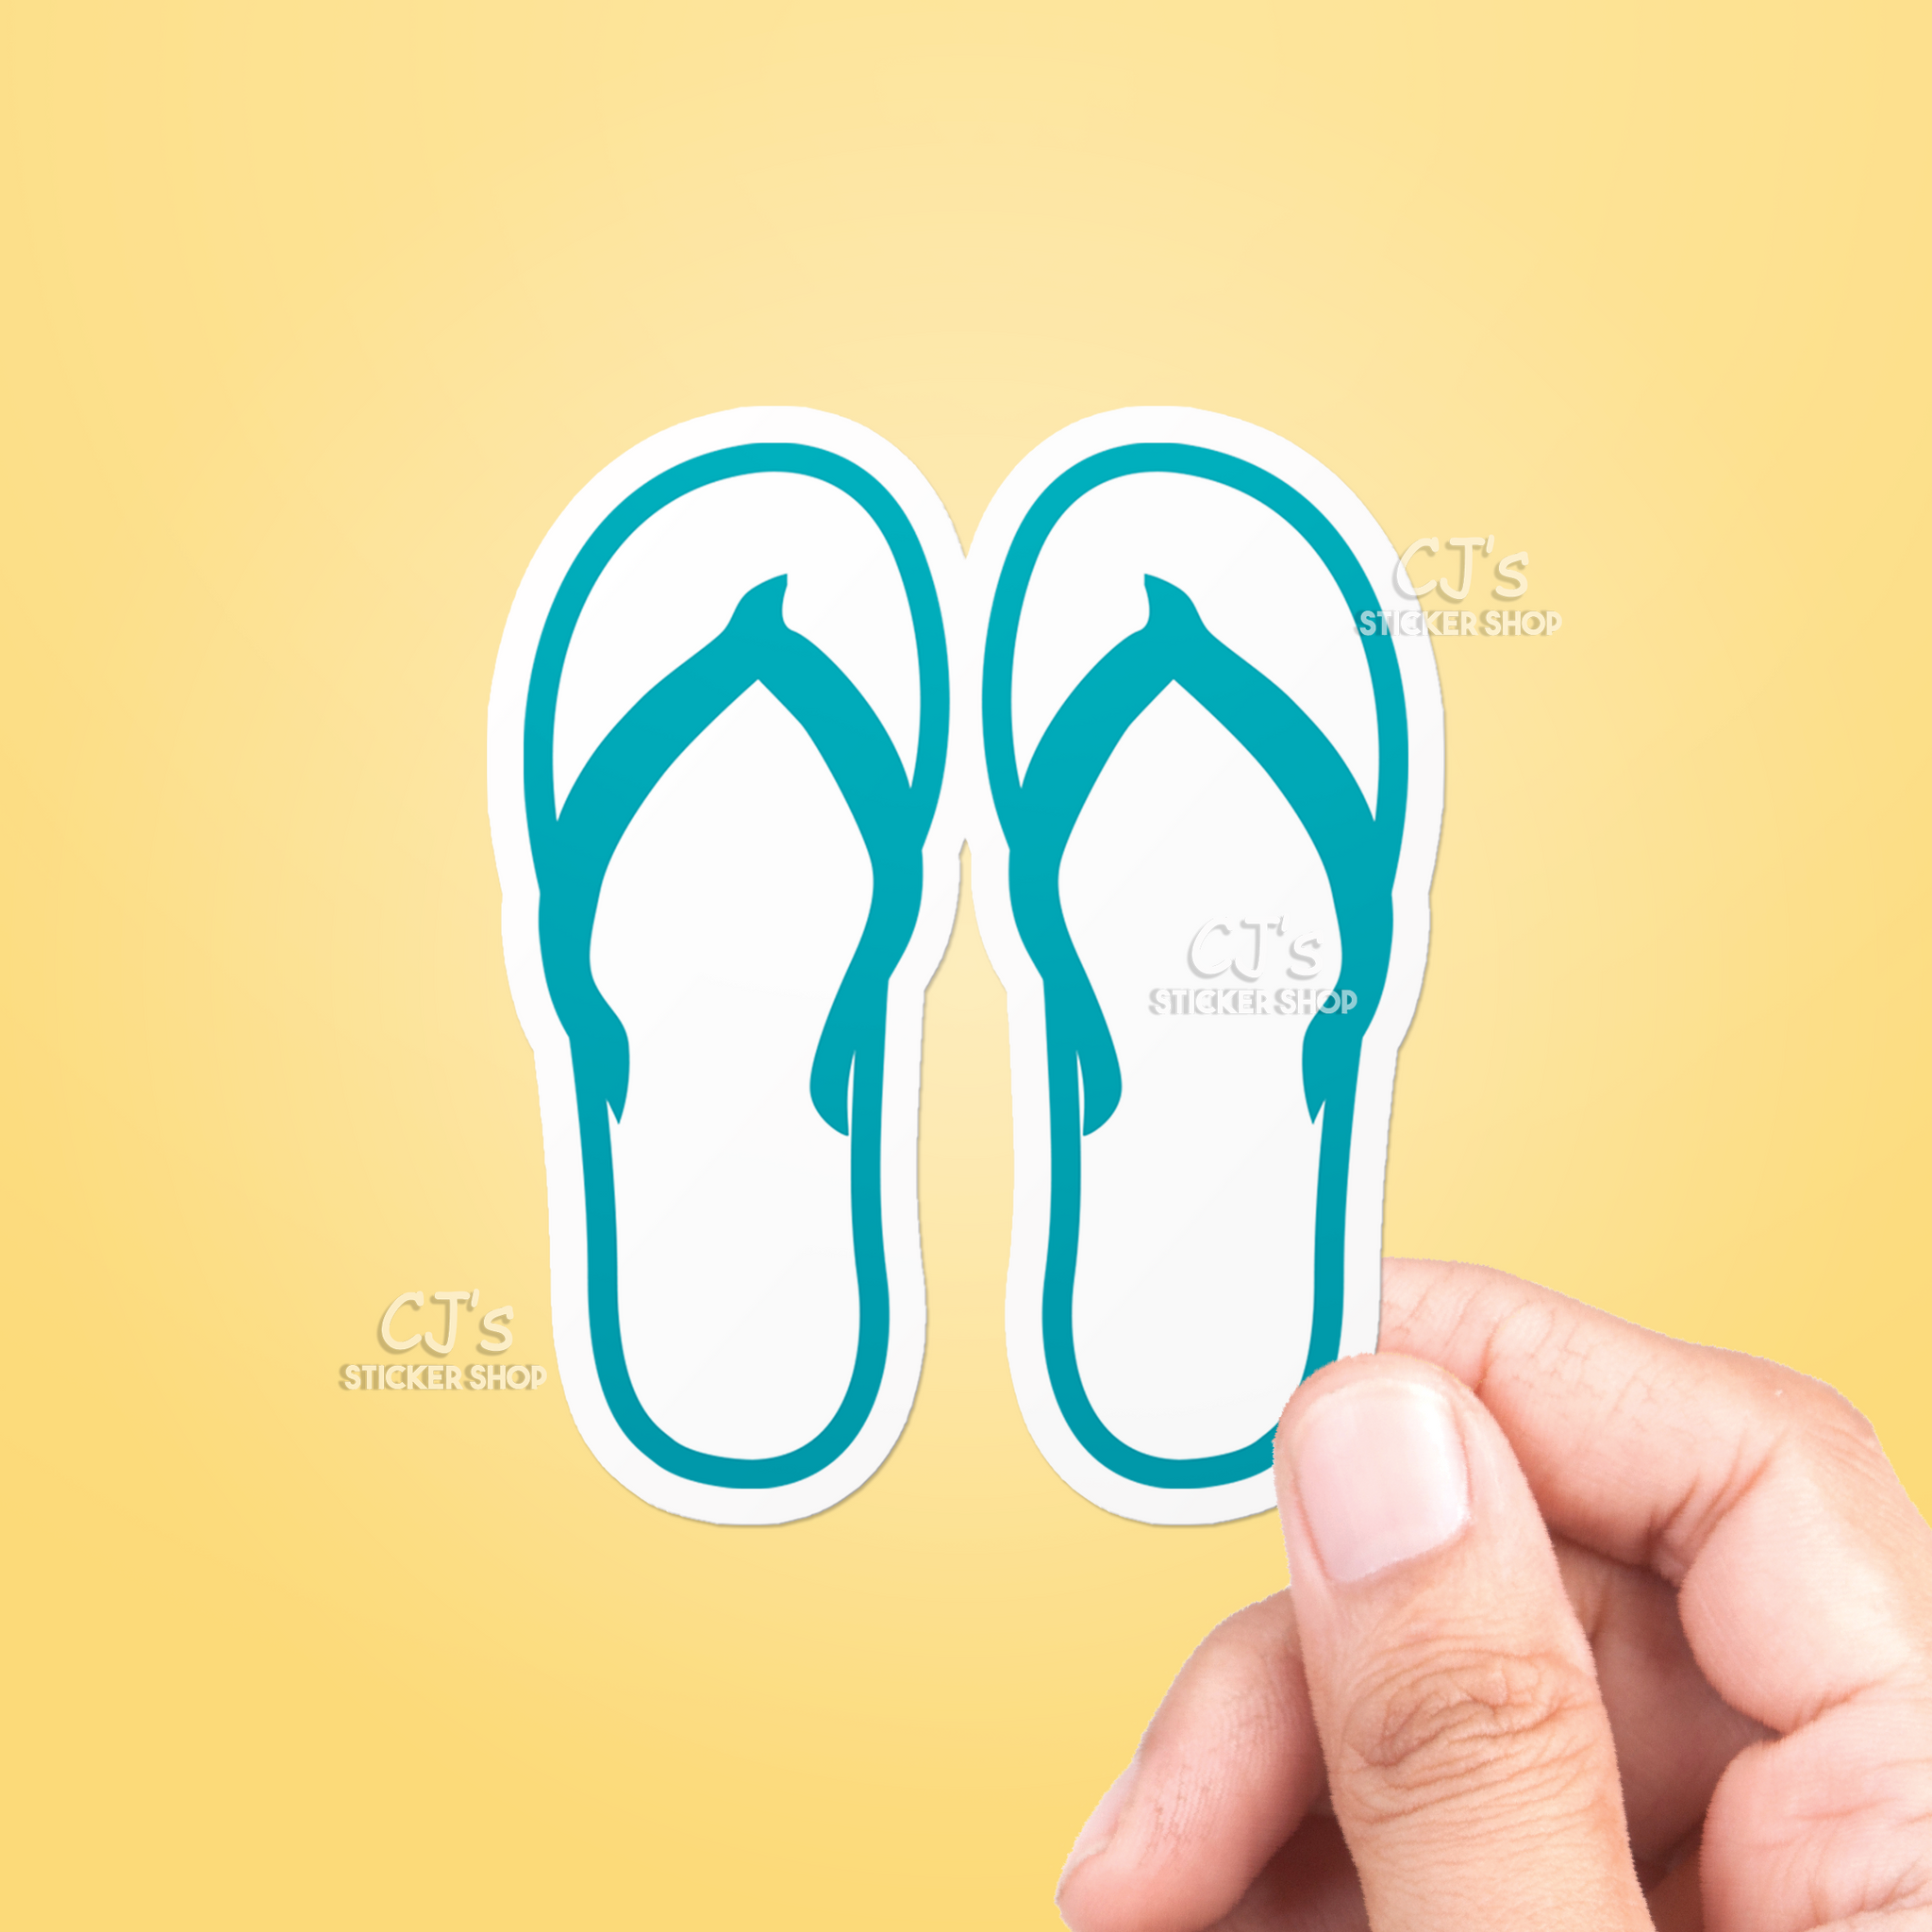 Blue Beach Sandals Sticker